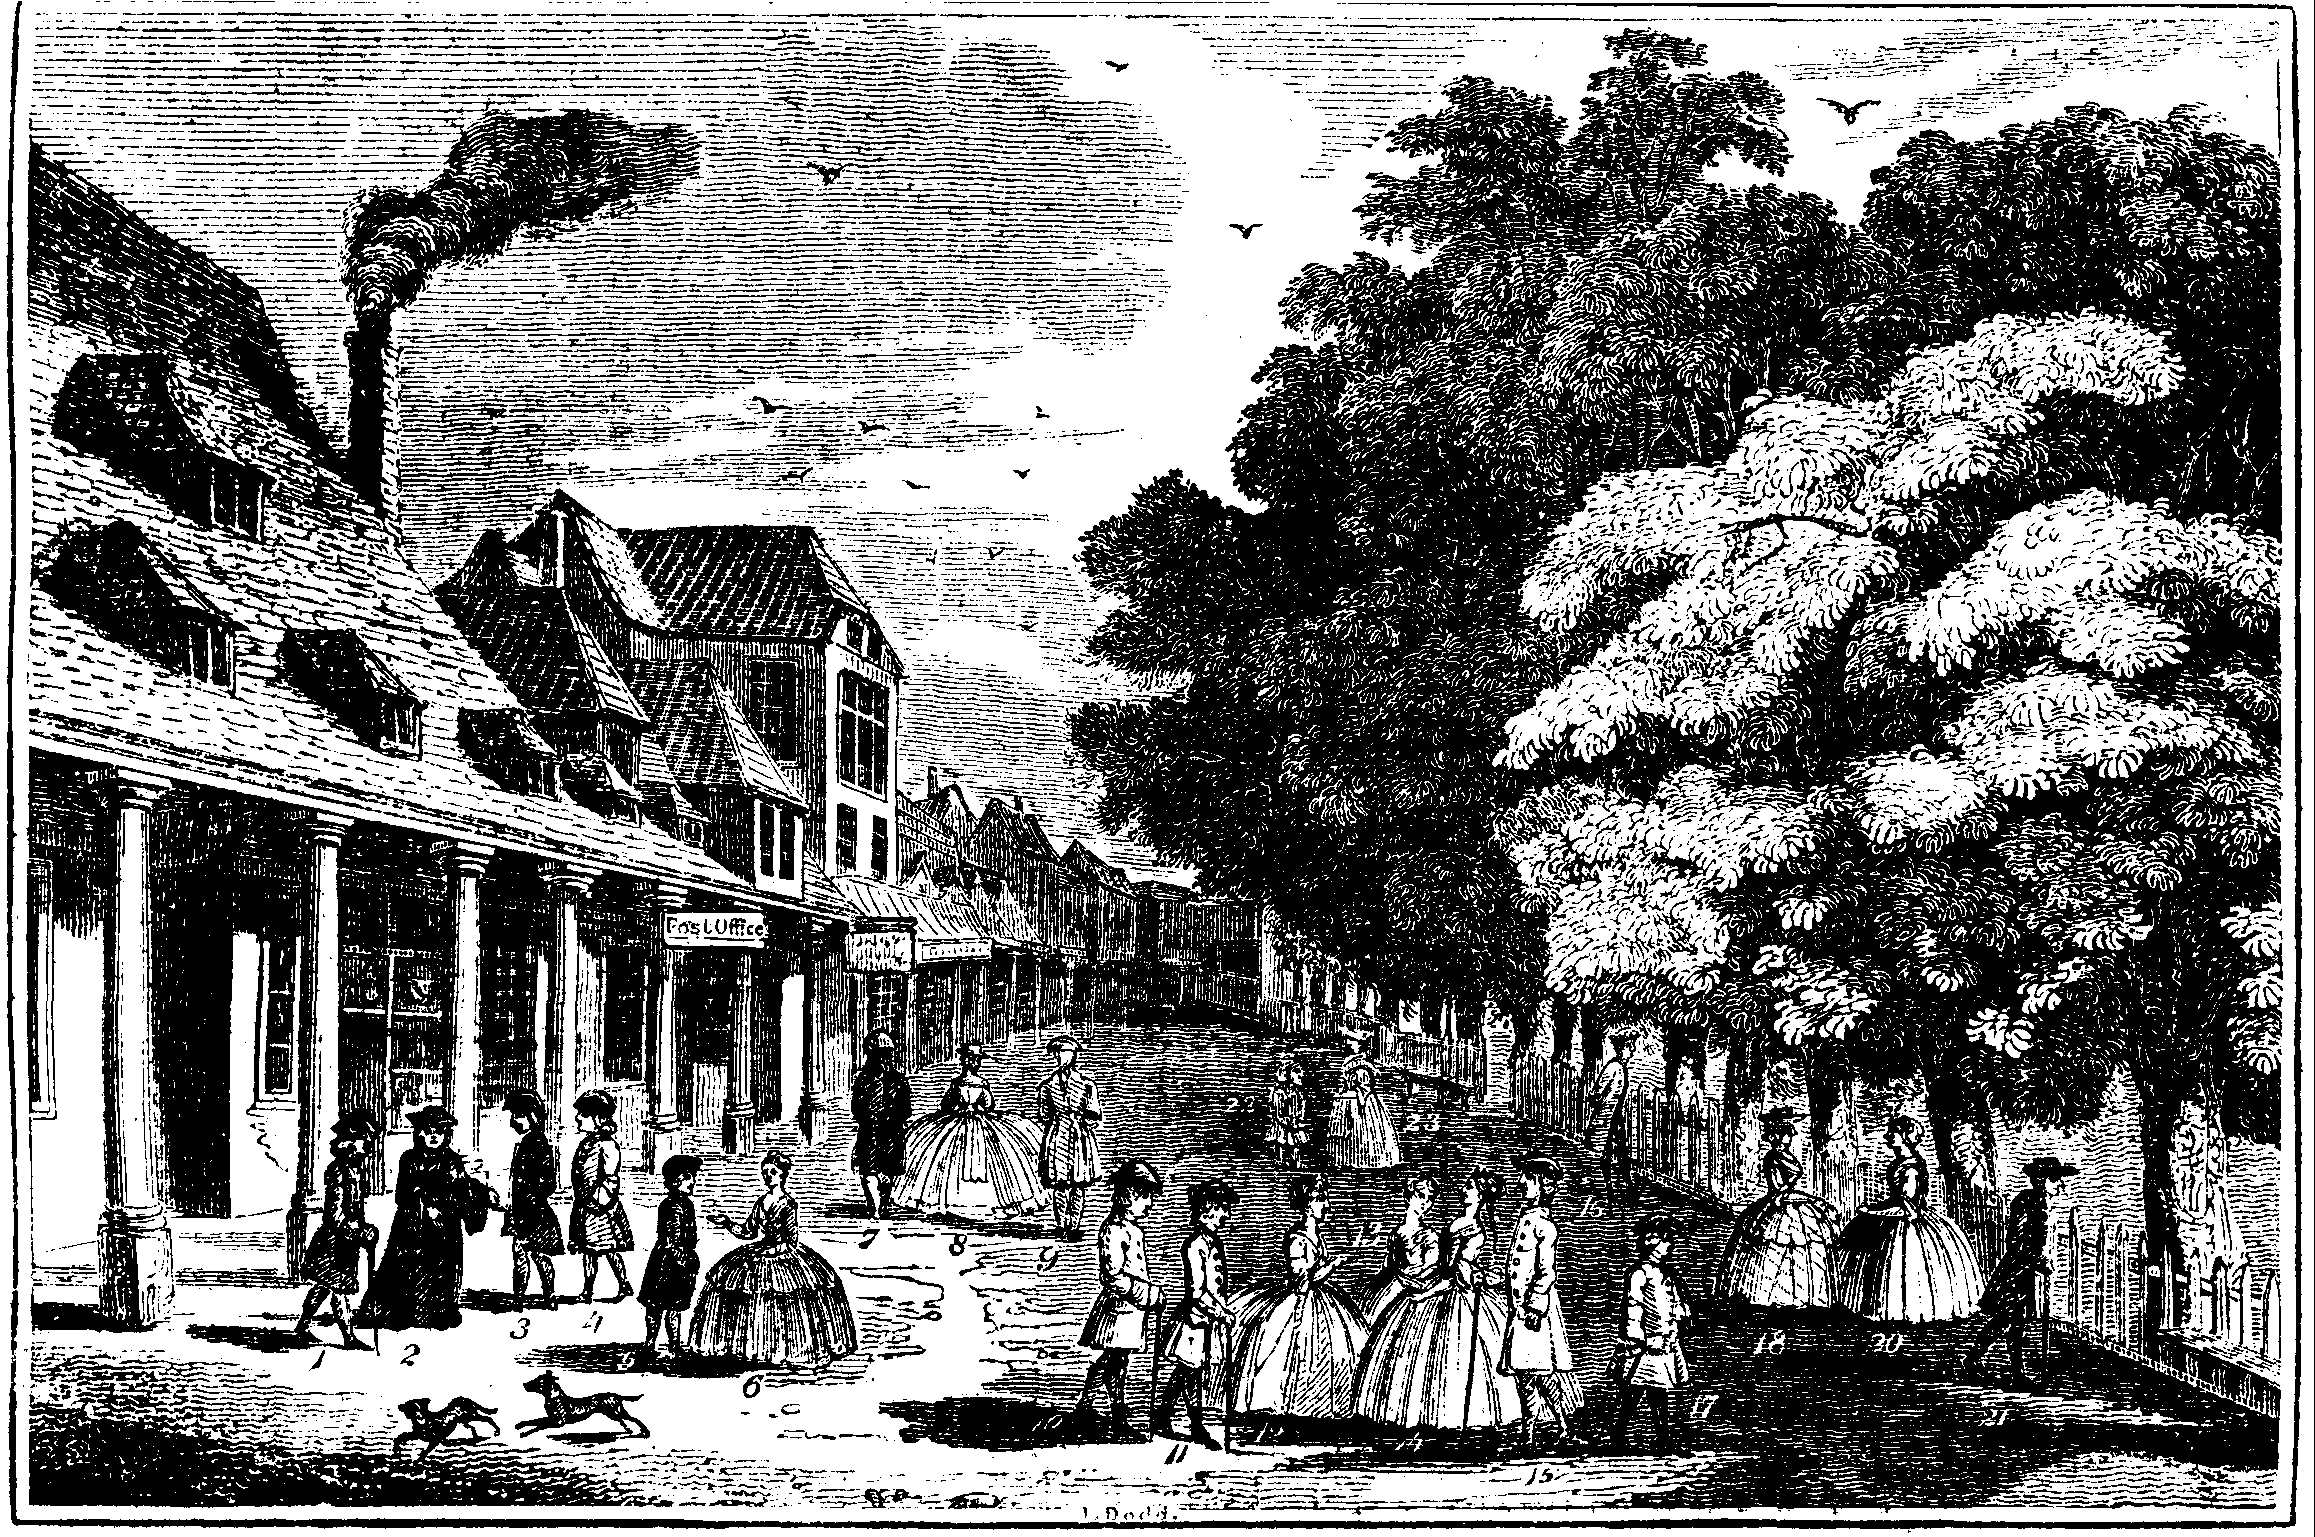 TUNBRIDGE WELLS IN 1748.